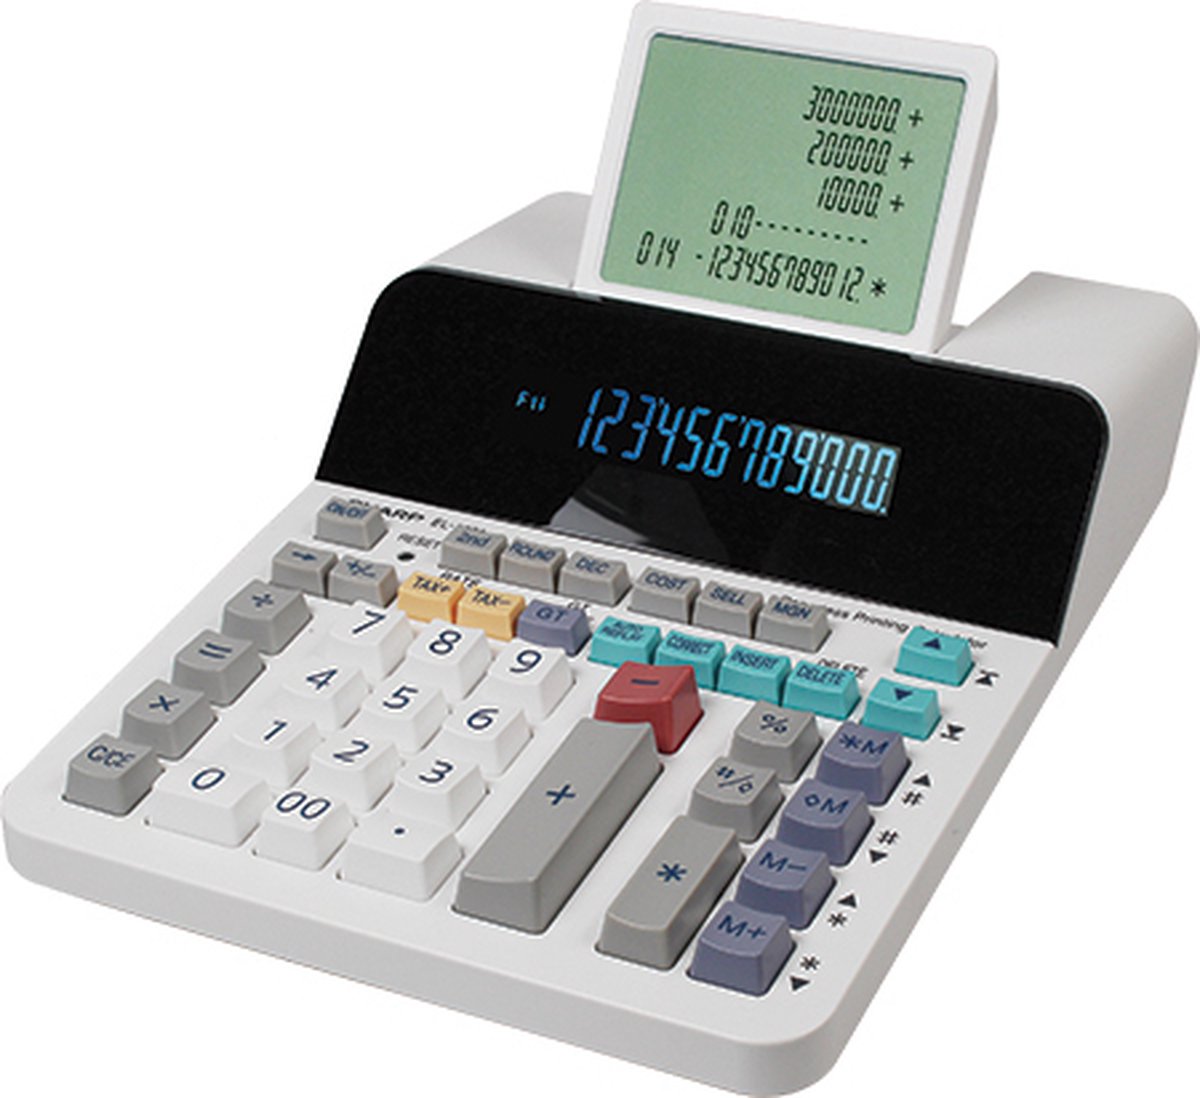 Calculator Sharp EL1901 - wit desk 12 digit